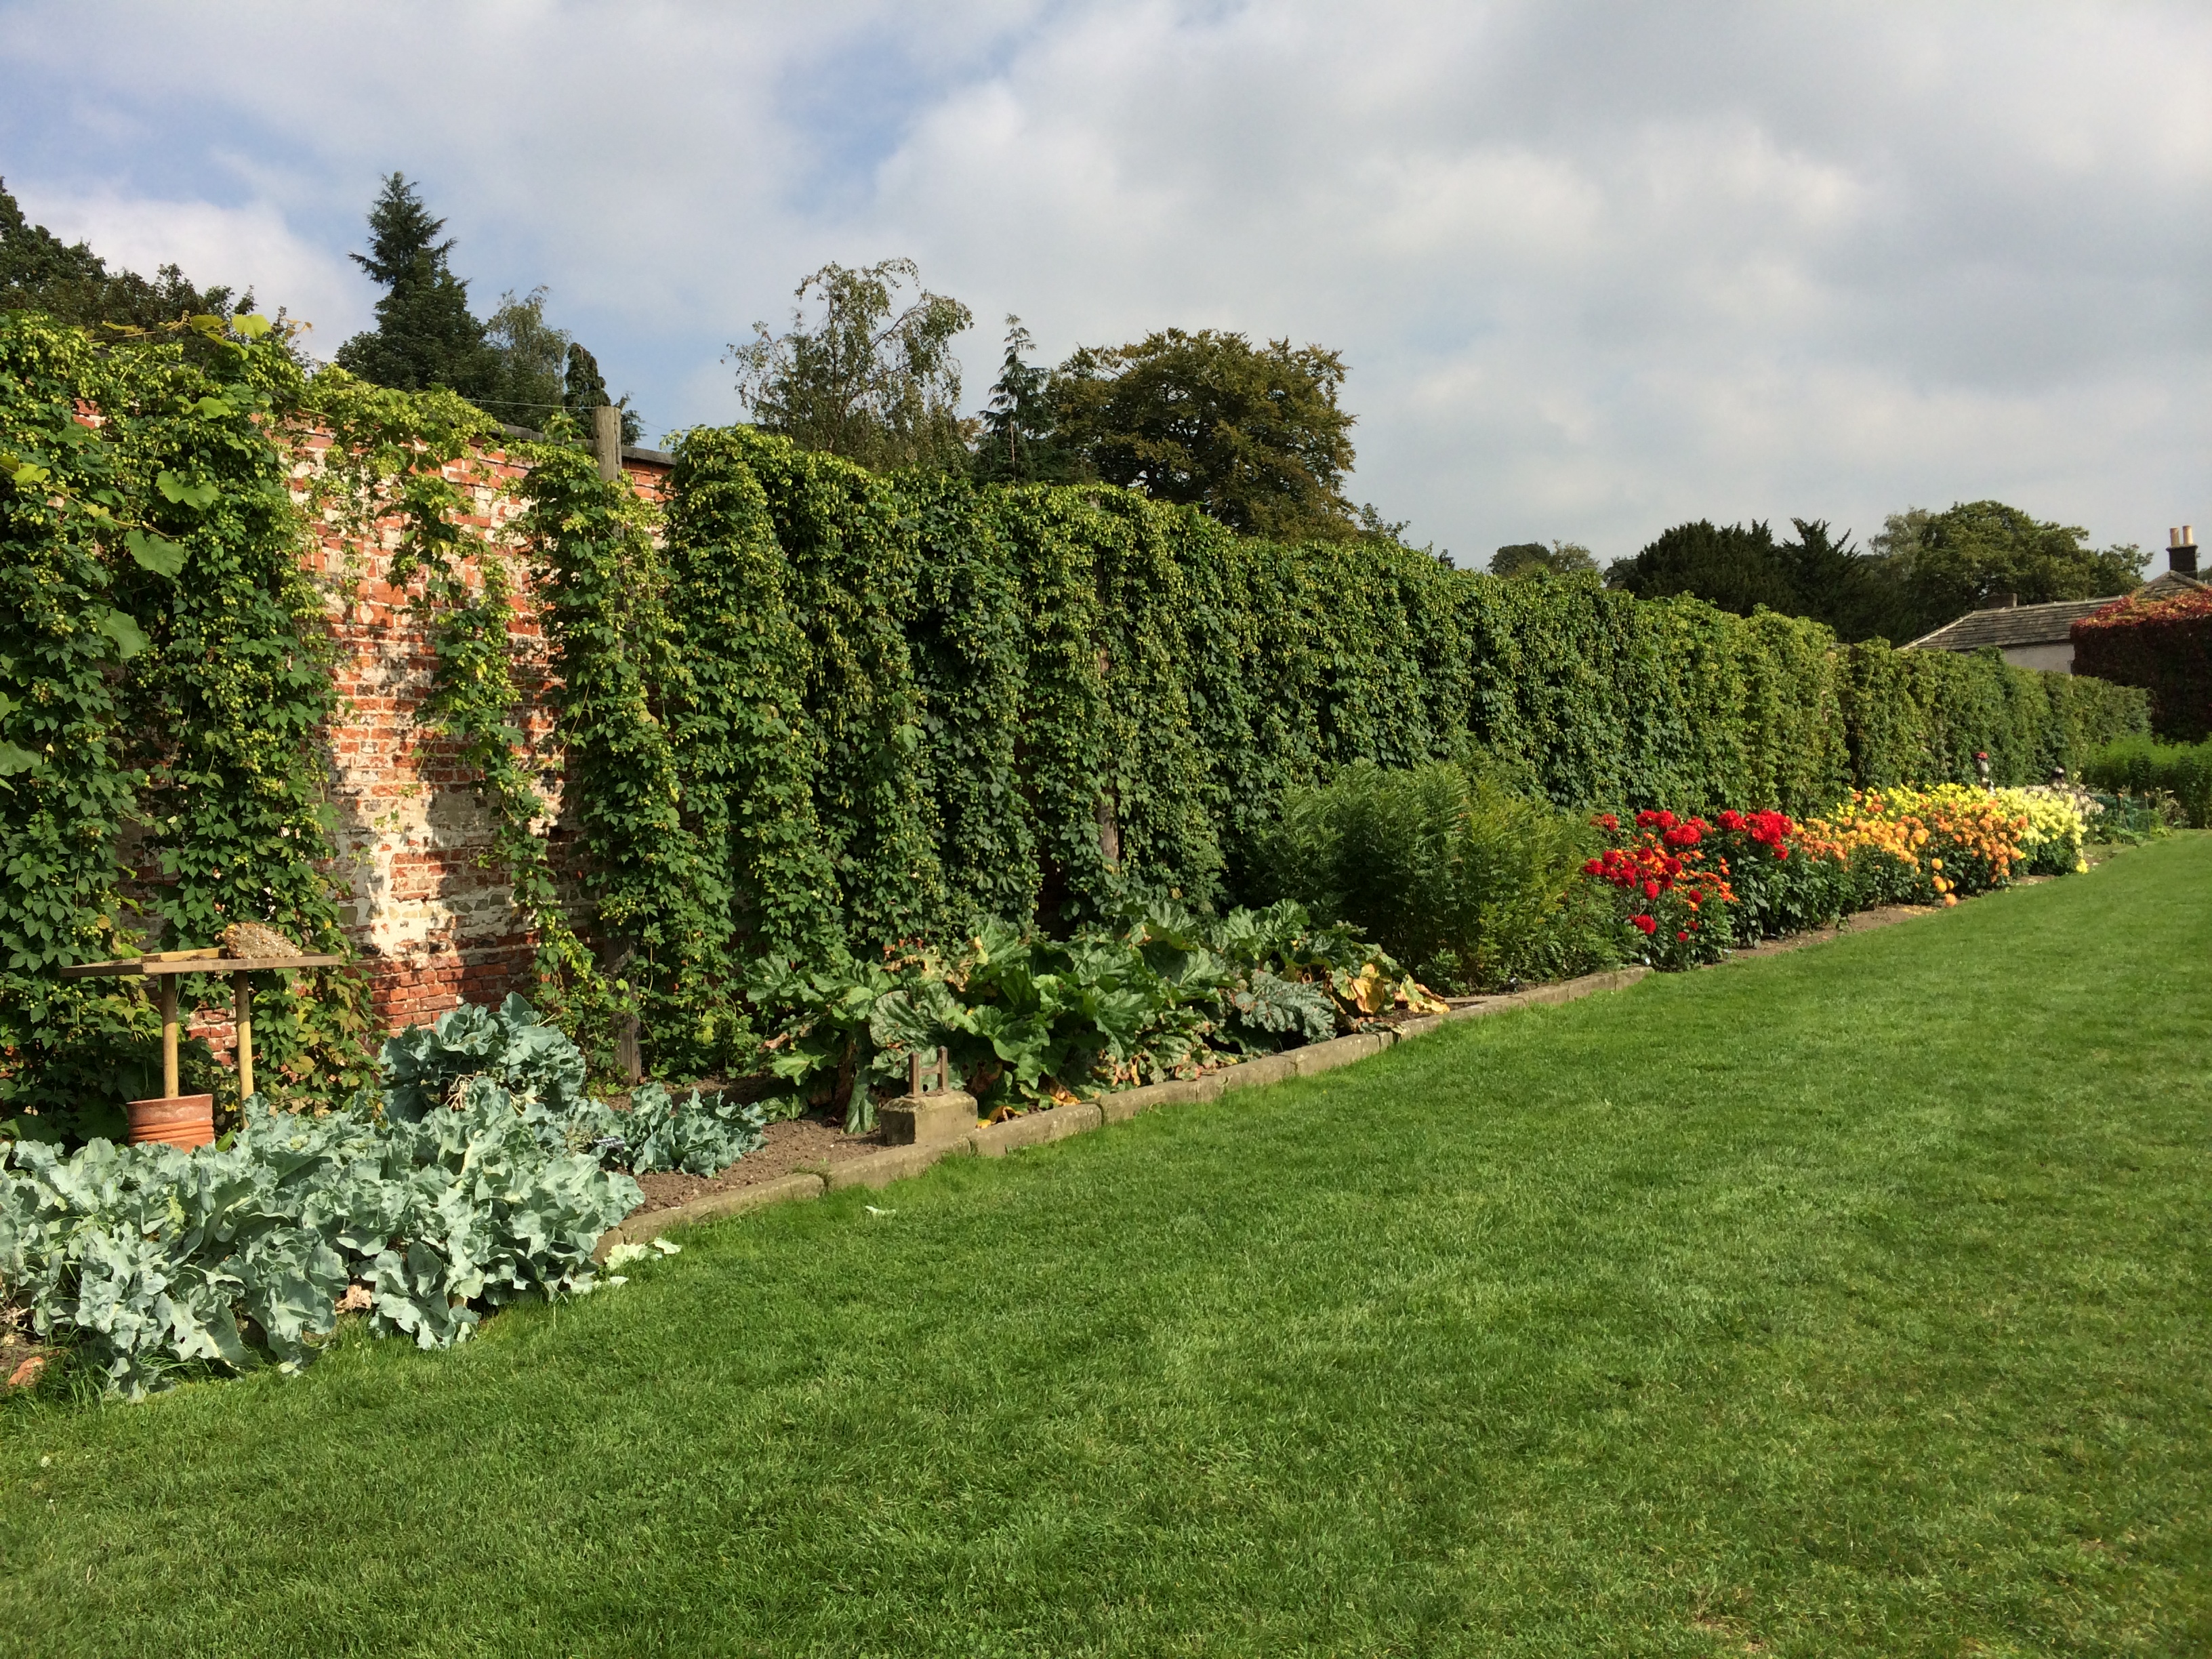 Harewood House has an popular walled garden